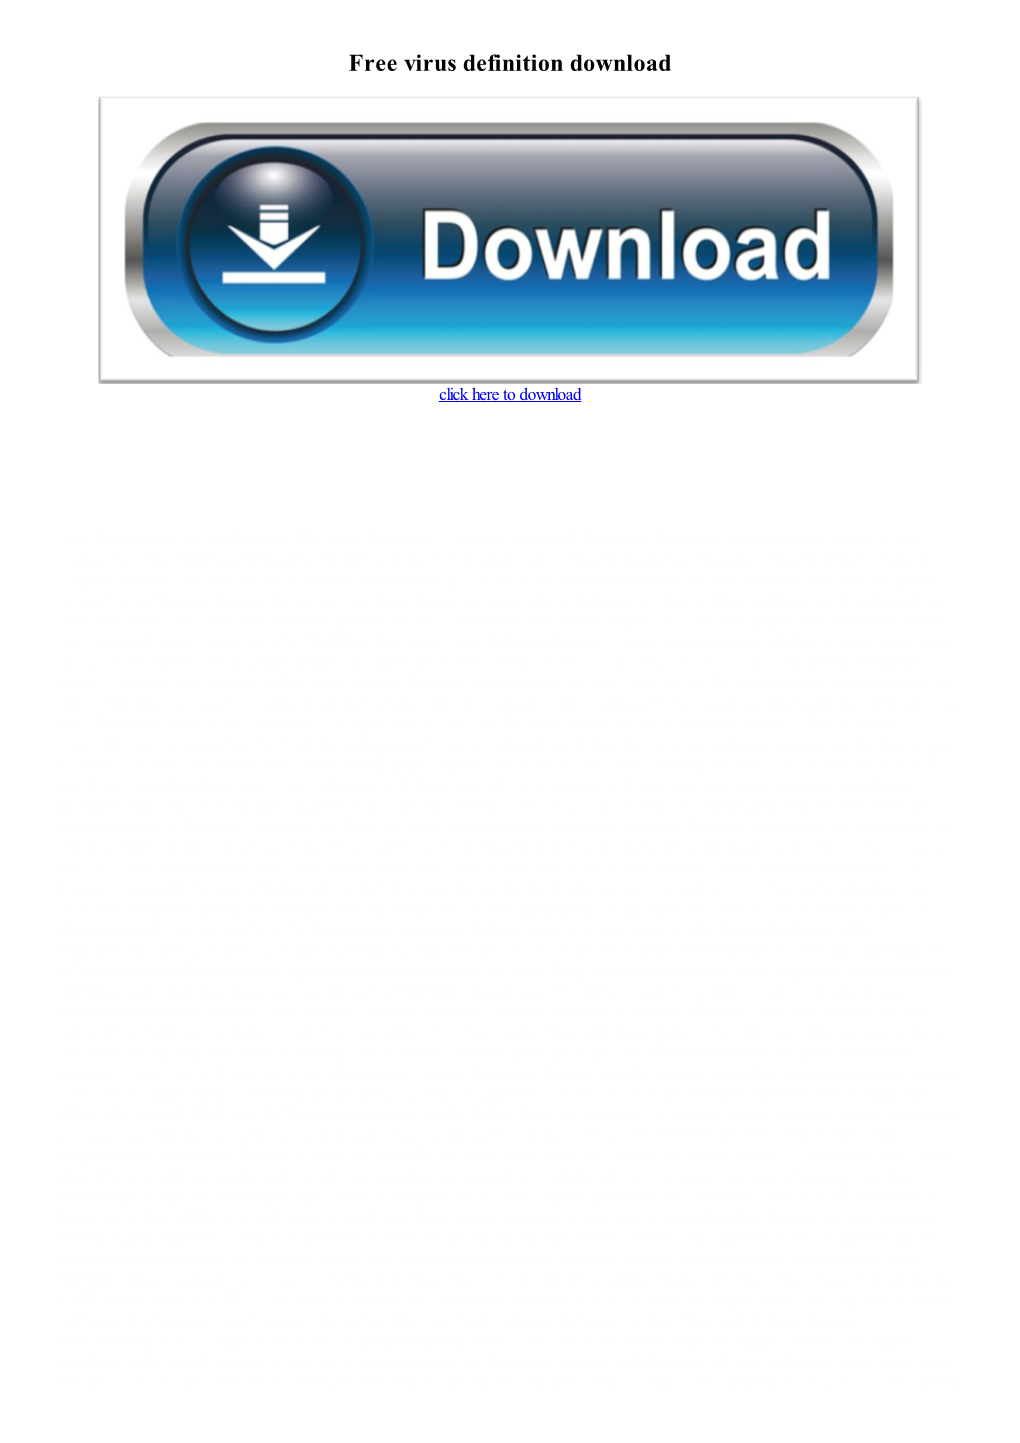 Free Virus Definition Download